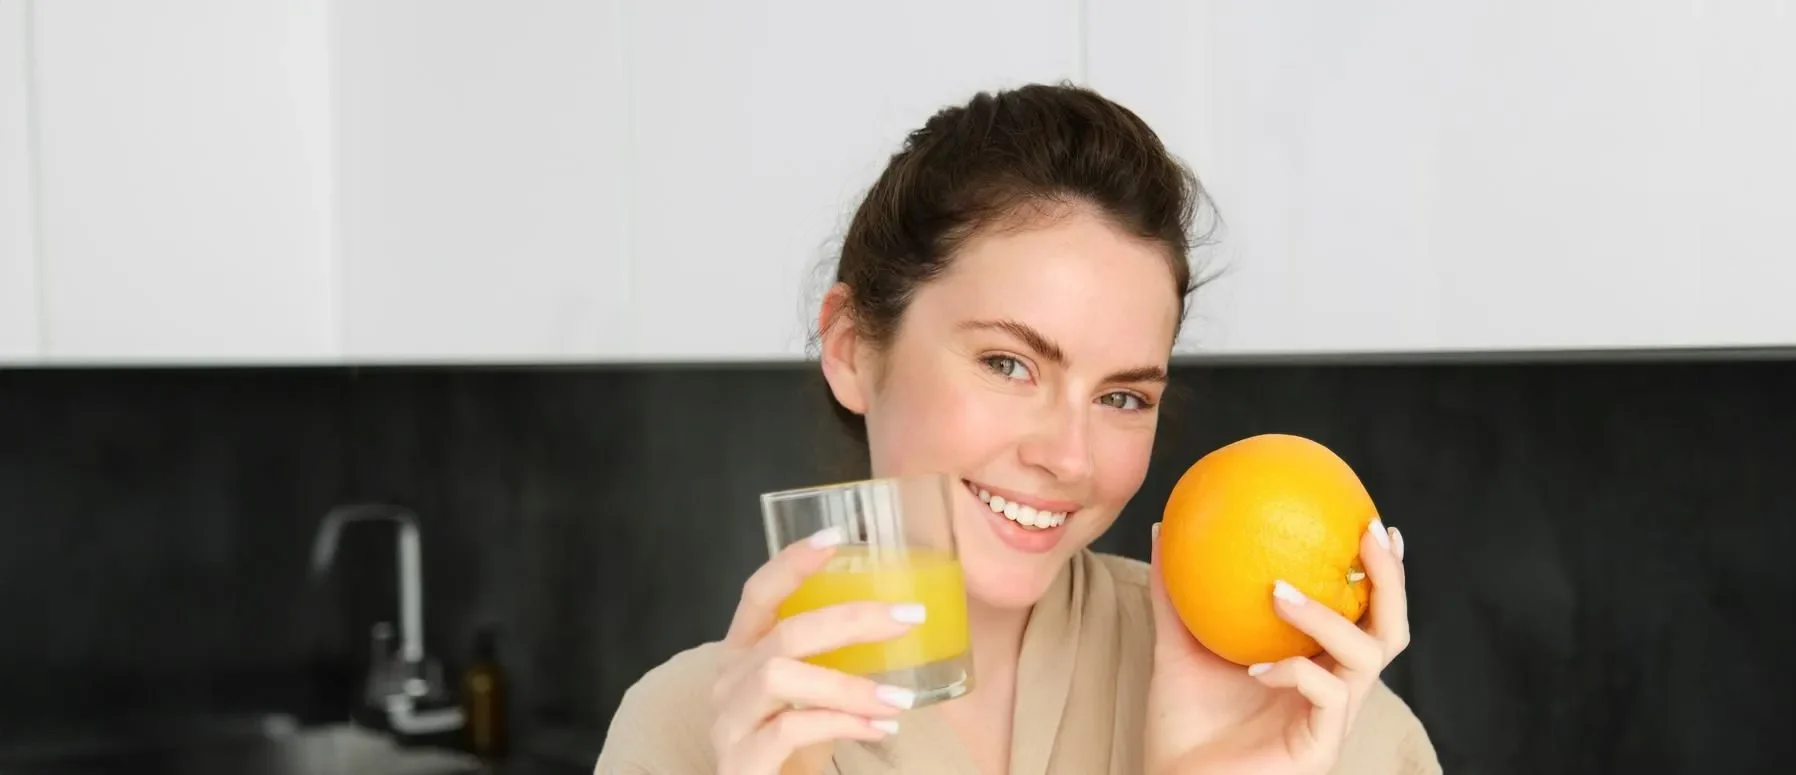 Image of goodlooking healthy woman in bathrobe drinking fresh juice showing orange fruit posing in